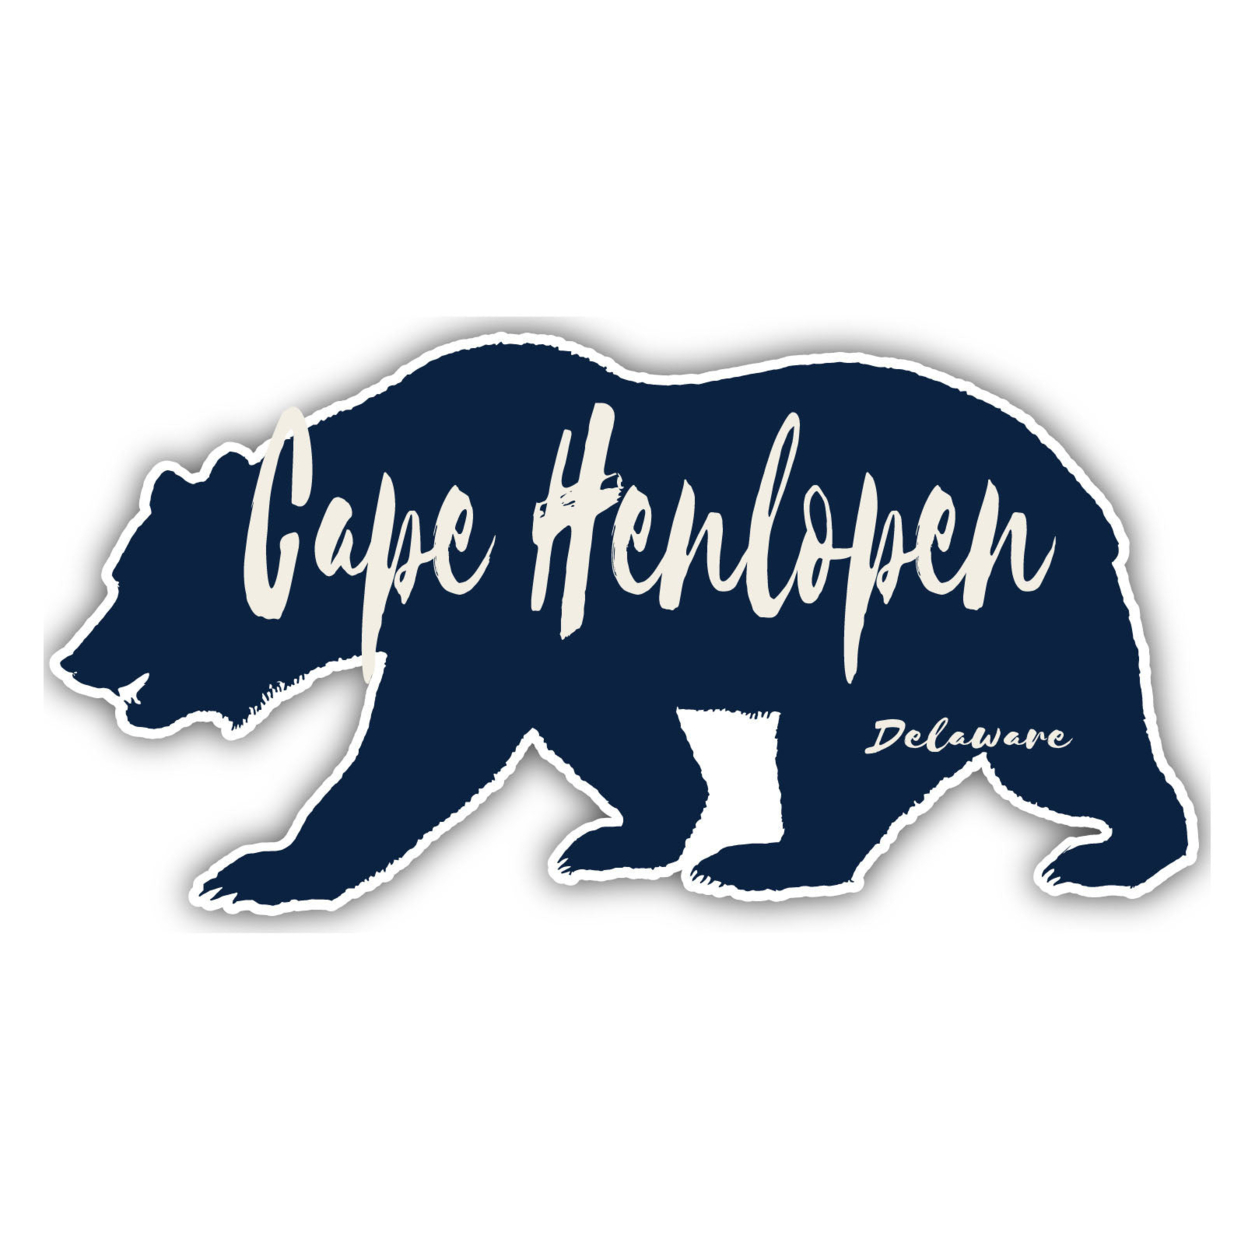 Cape Henlopen Delaware Souvenir Decorative Stickers (Choose Theme And Size) - Single Unit, 6-Inch, Bear